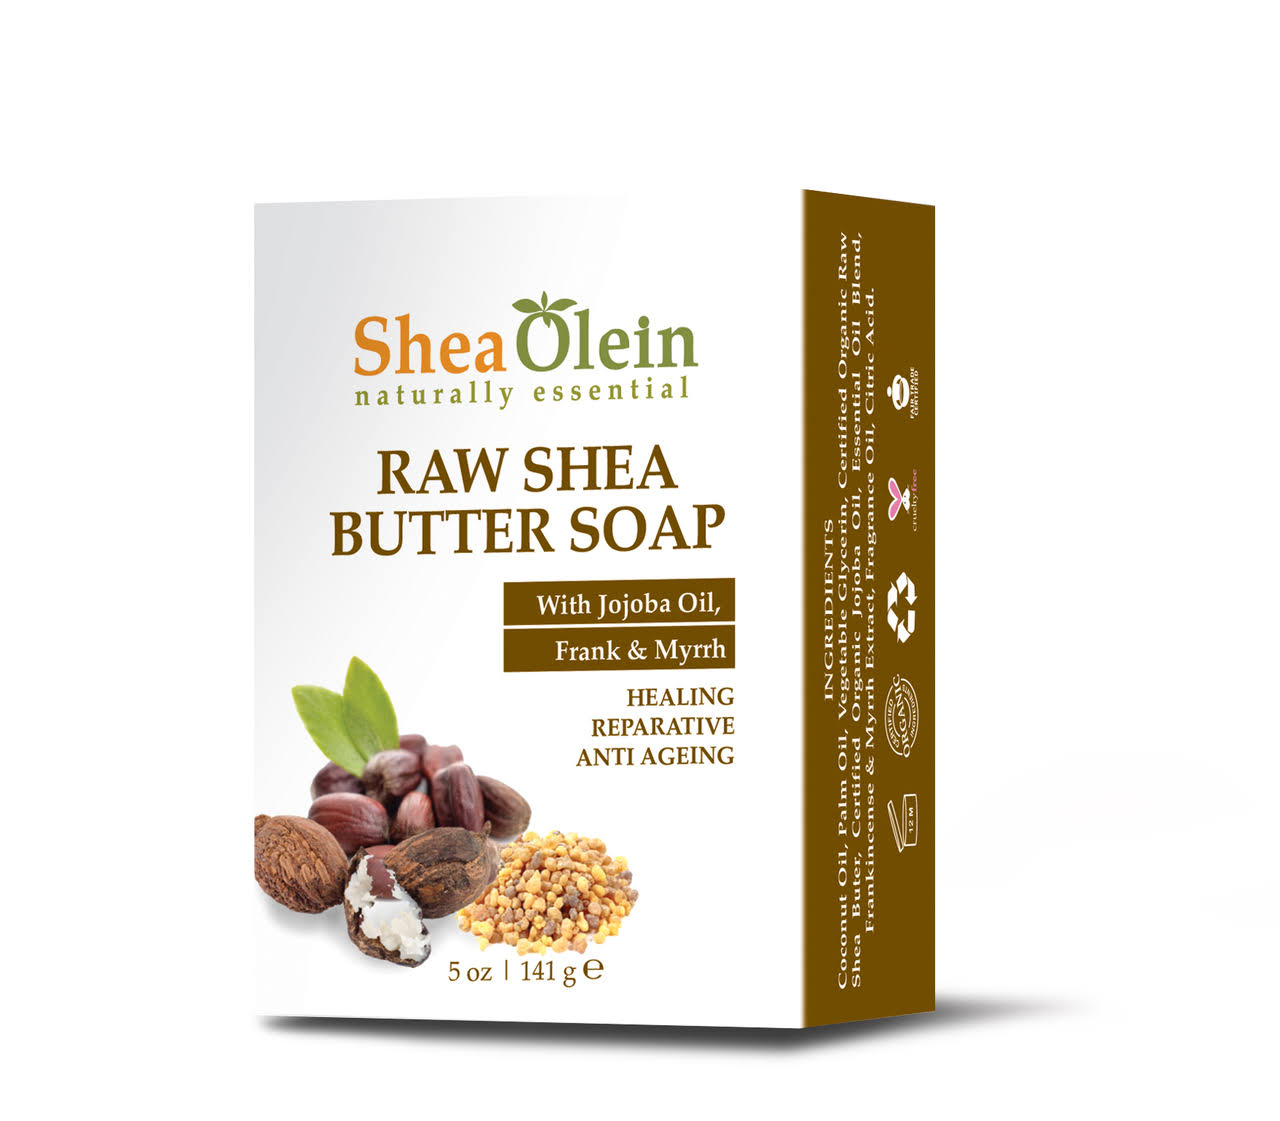 Shea Olein - Raw Shea Butter Soap - with Jojoba Oil, 5oz